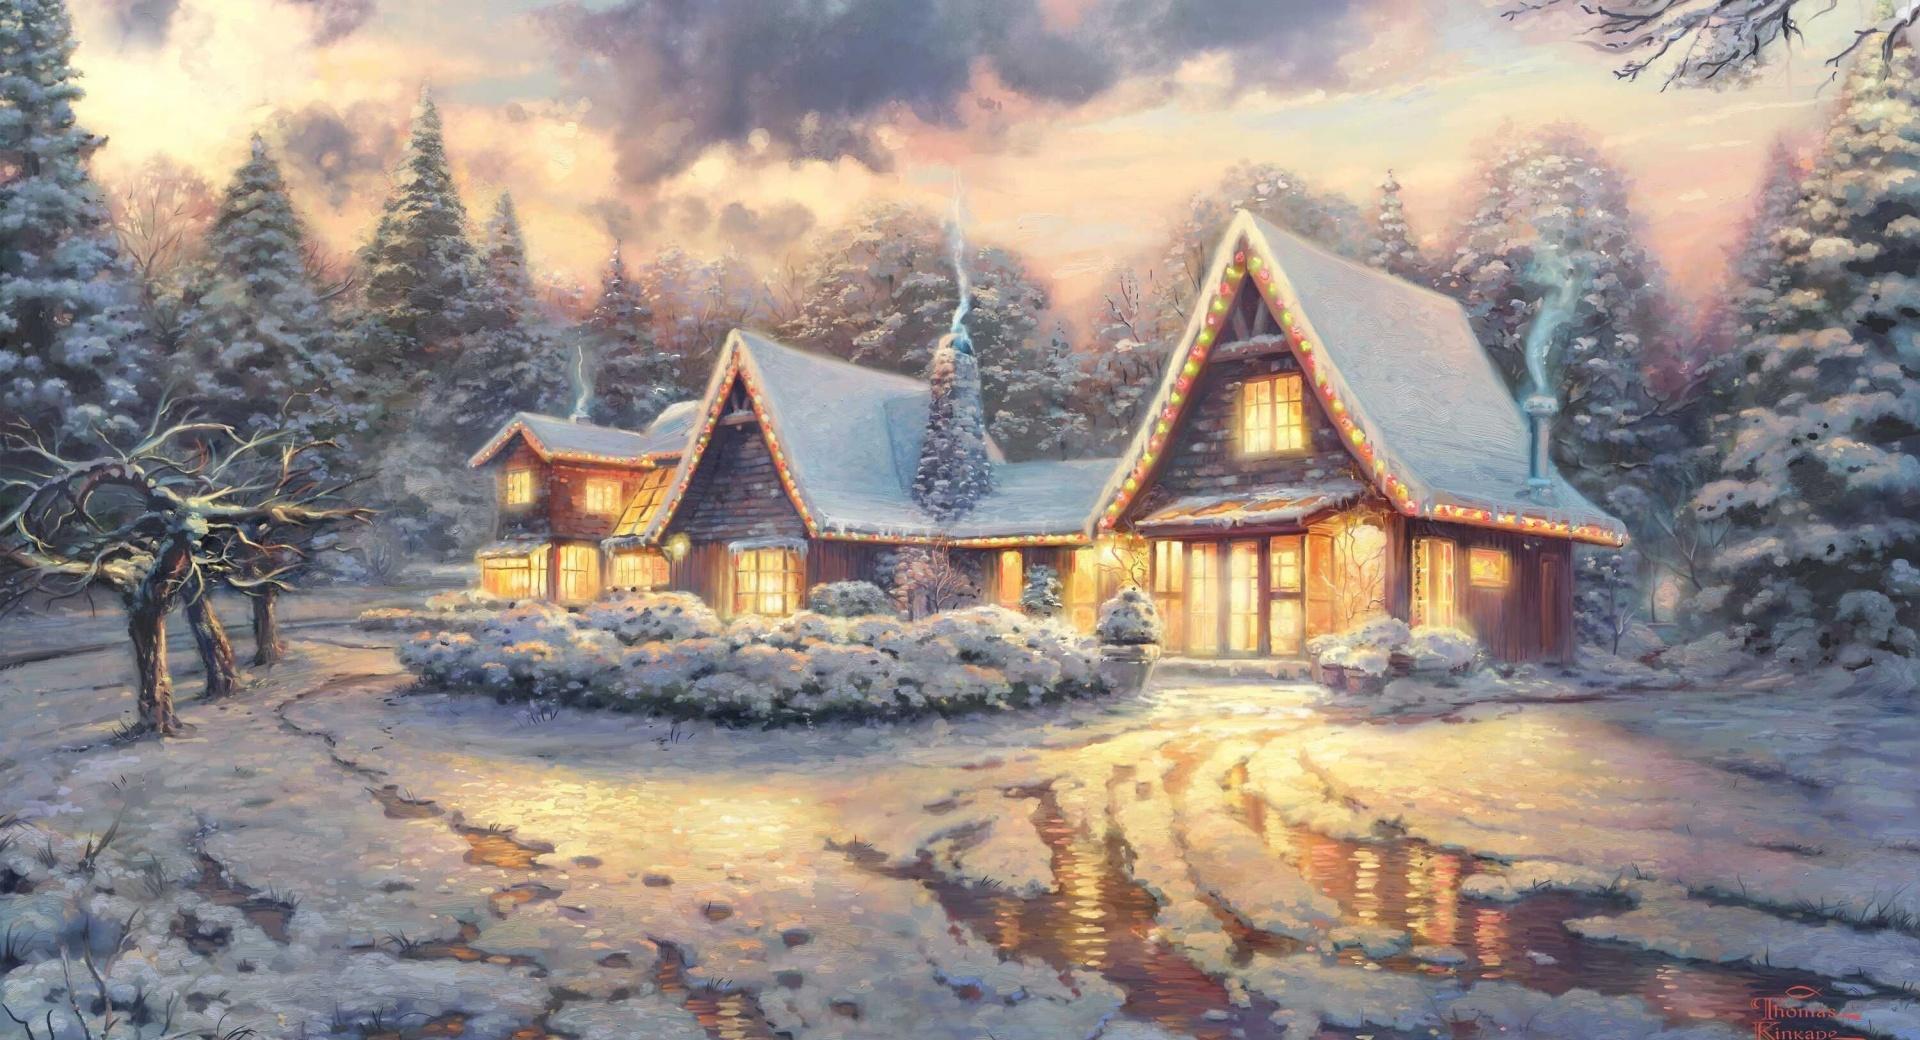 Christmas Lodge by Thomas Kinkade at 1024 x 1024 iPad size wallpapers HD quality